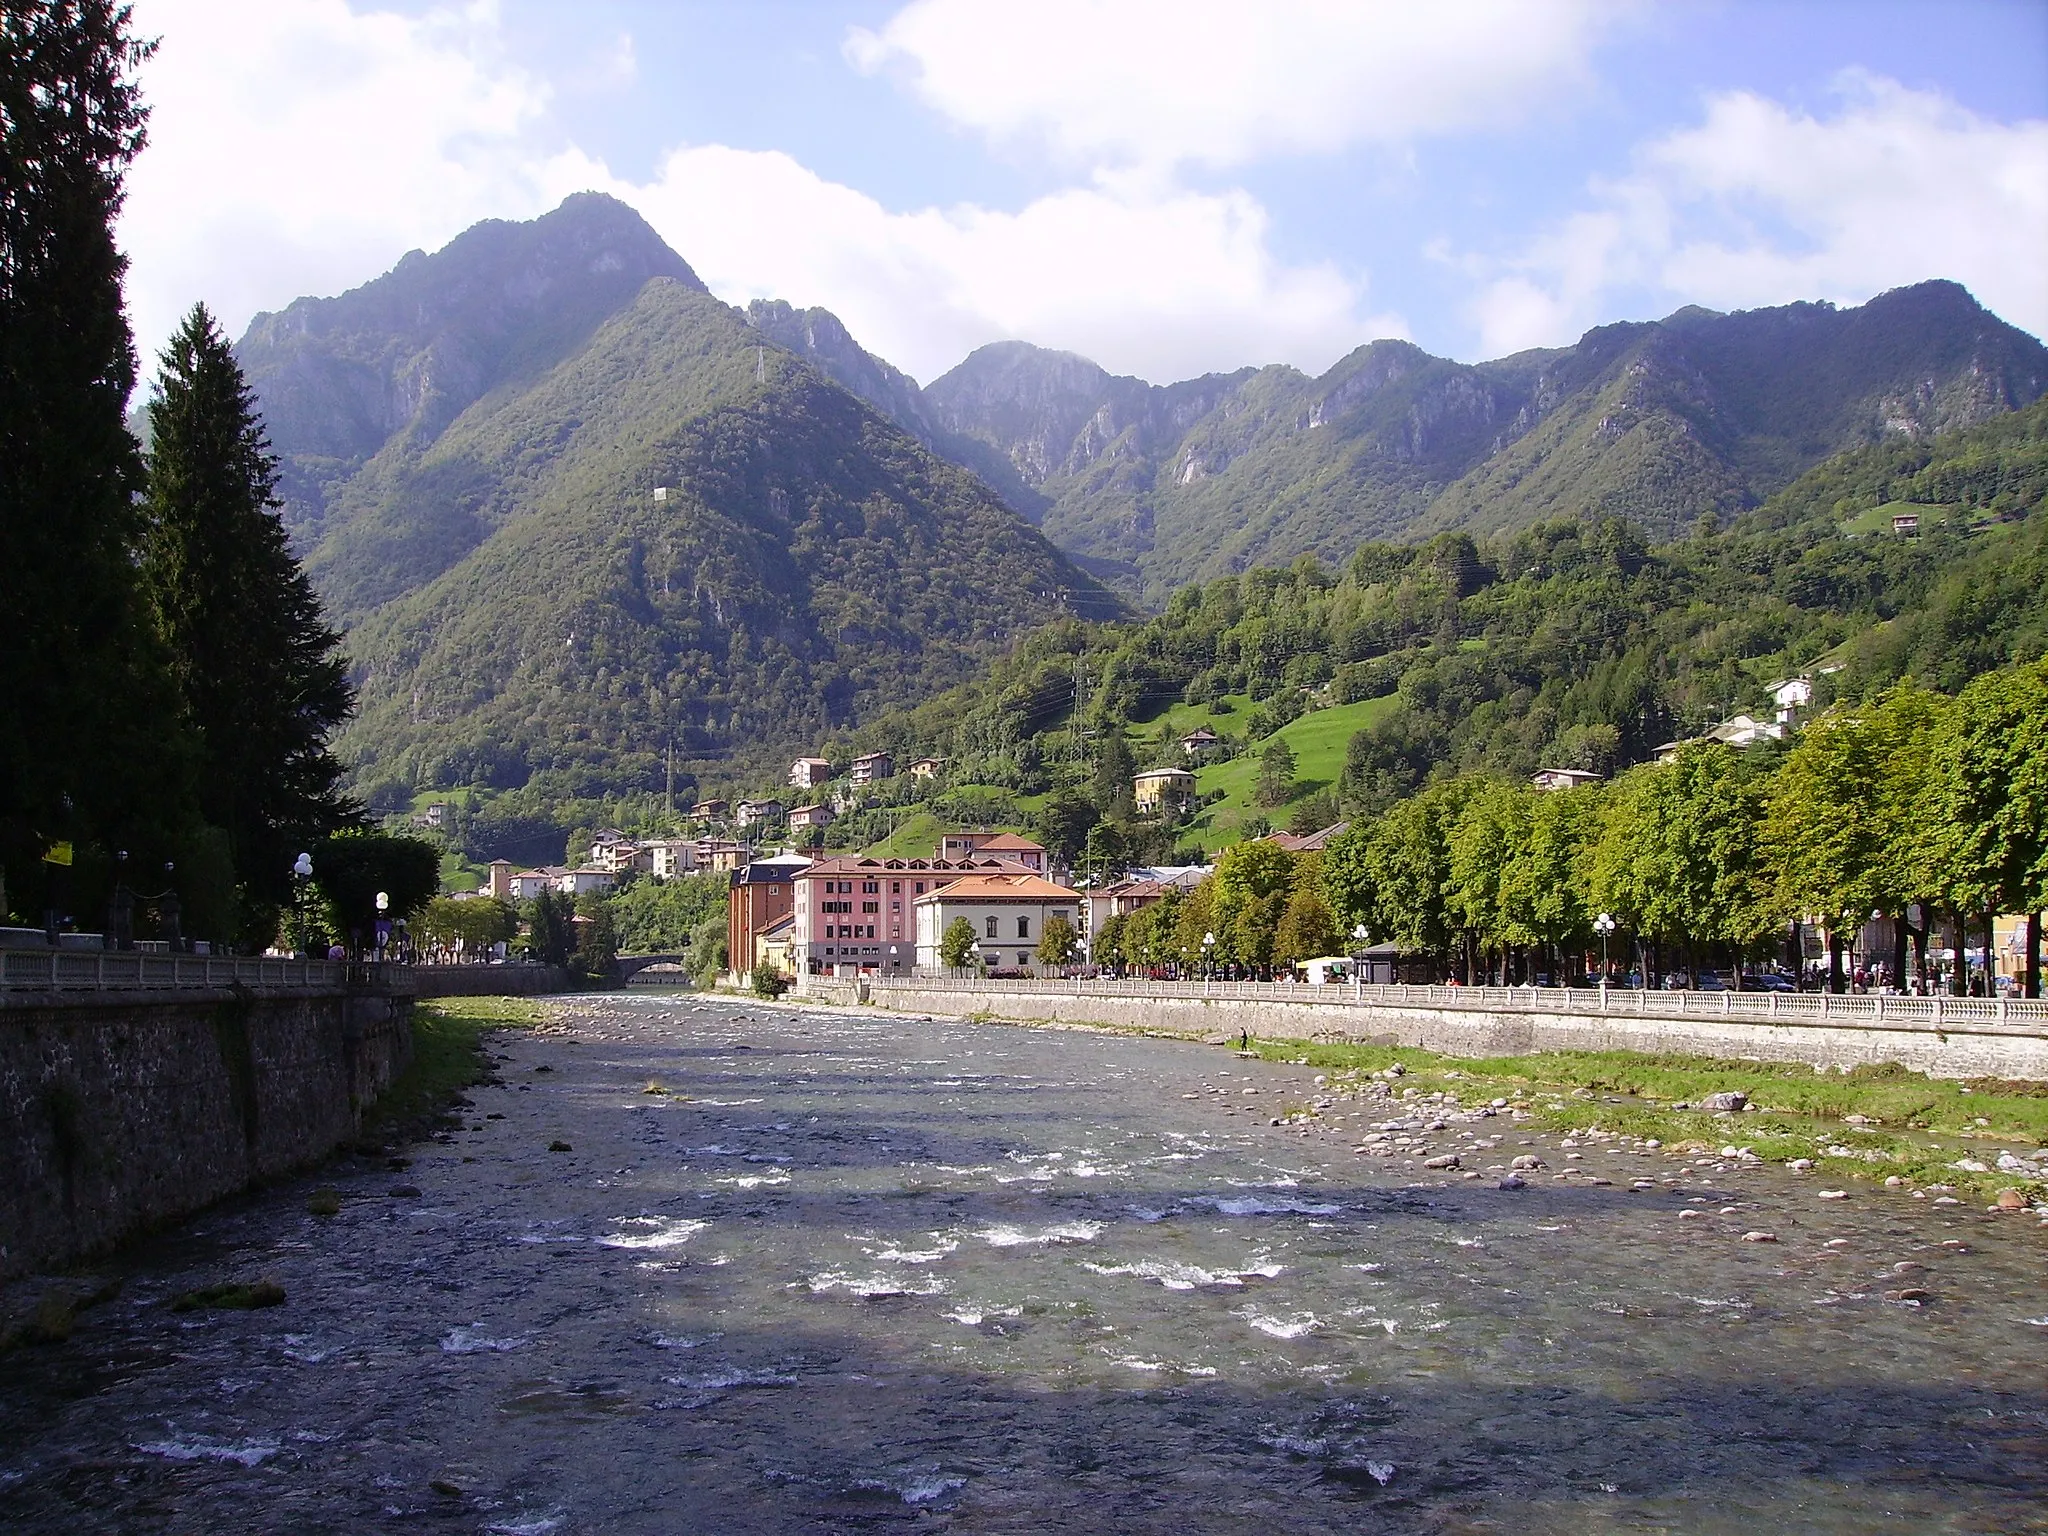 Image de San Pellegrino Terme